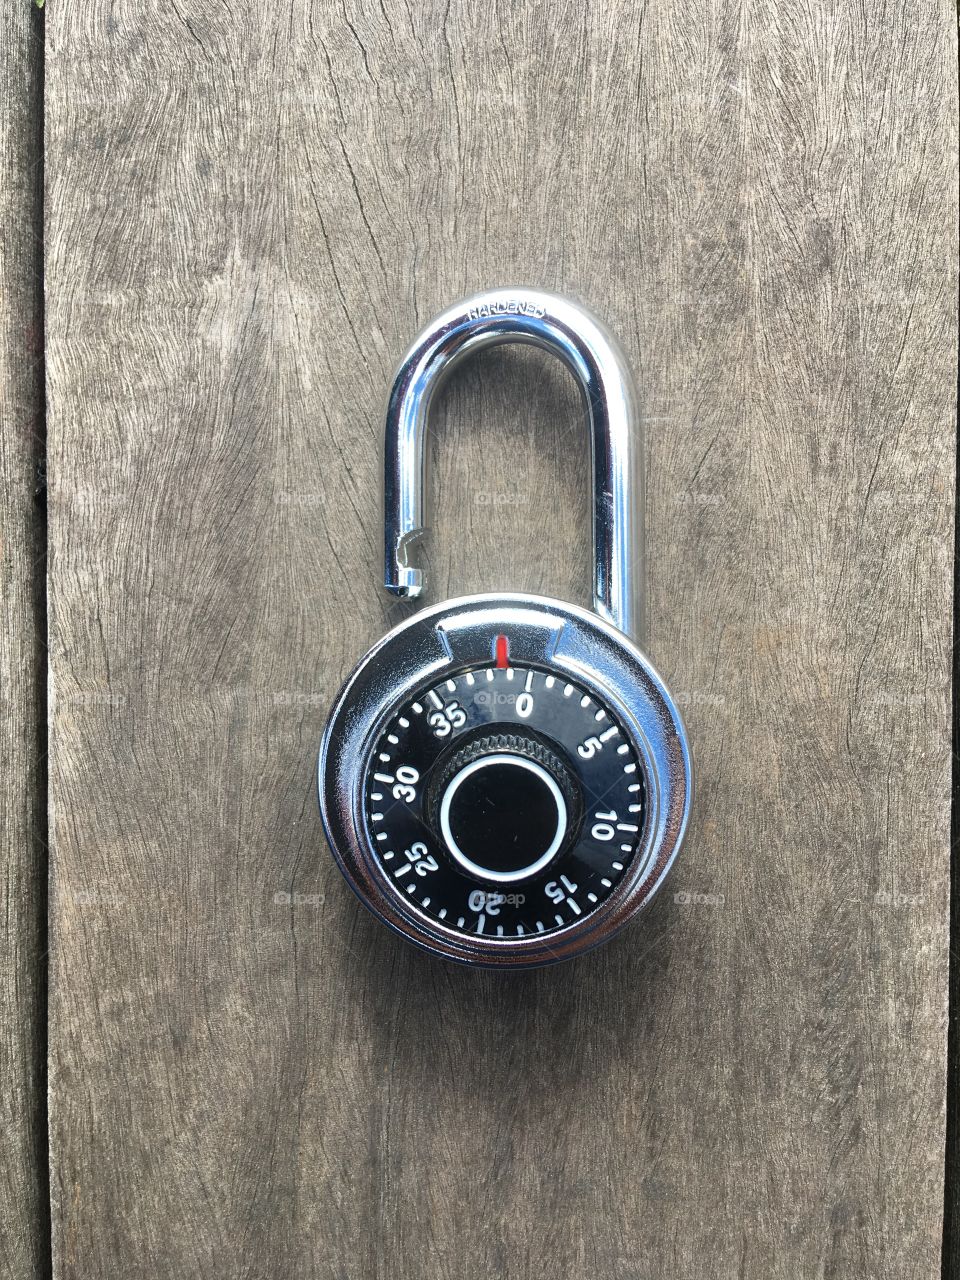 Lock, Security, Safety, Secrecy, Safe